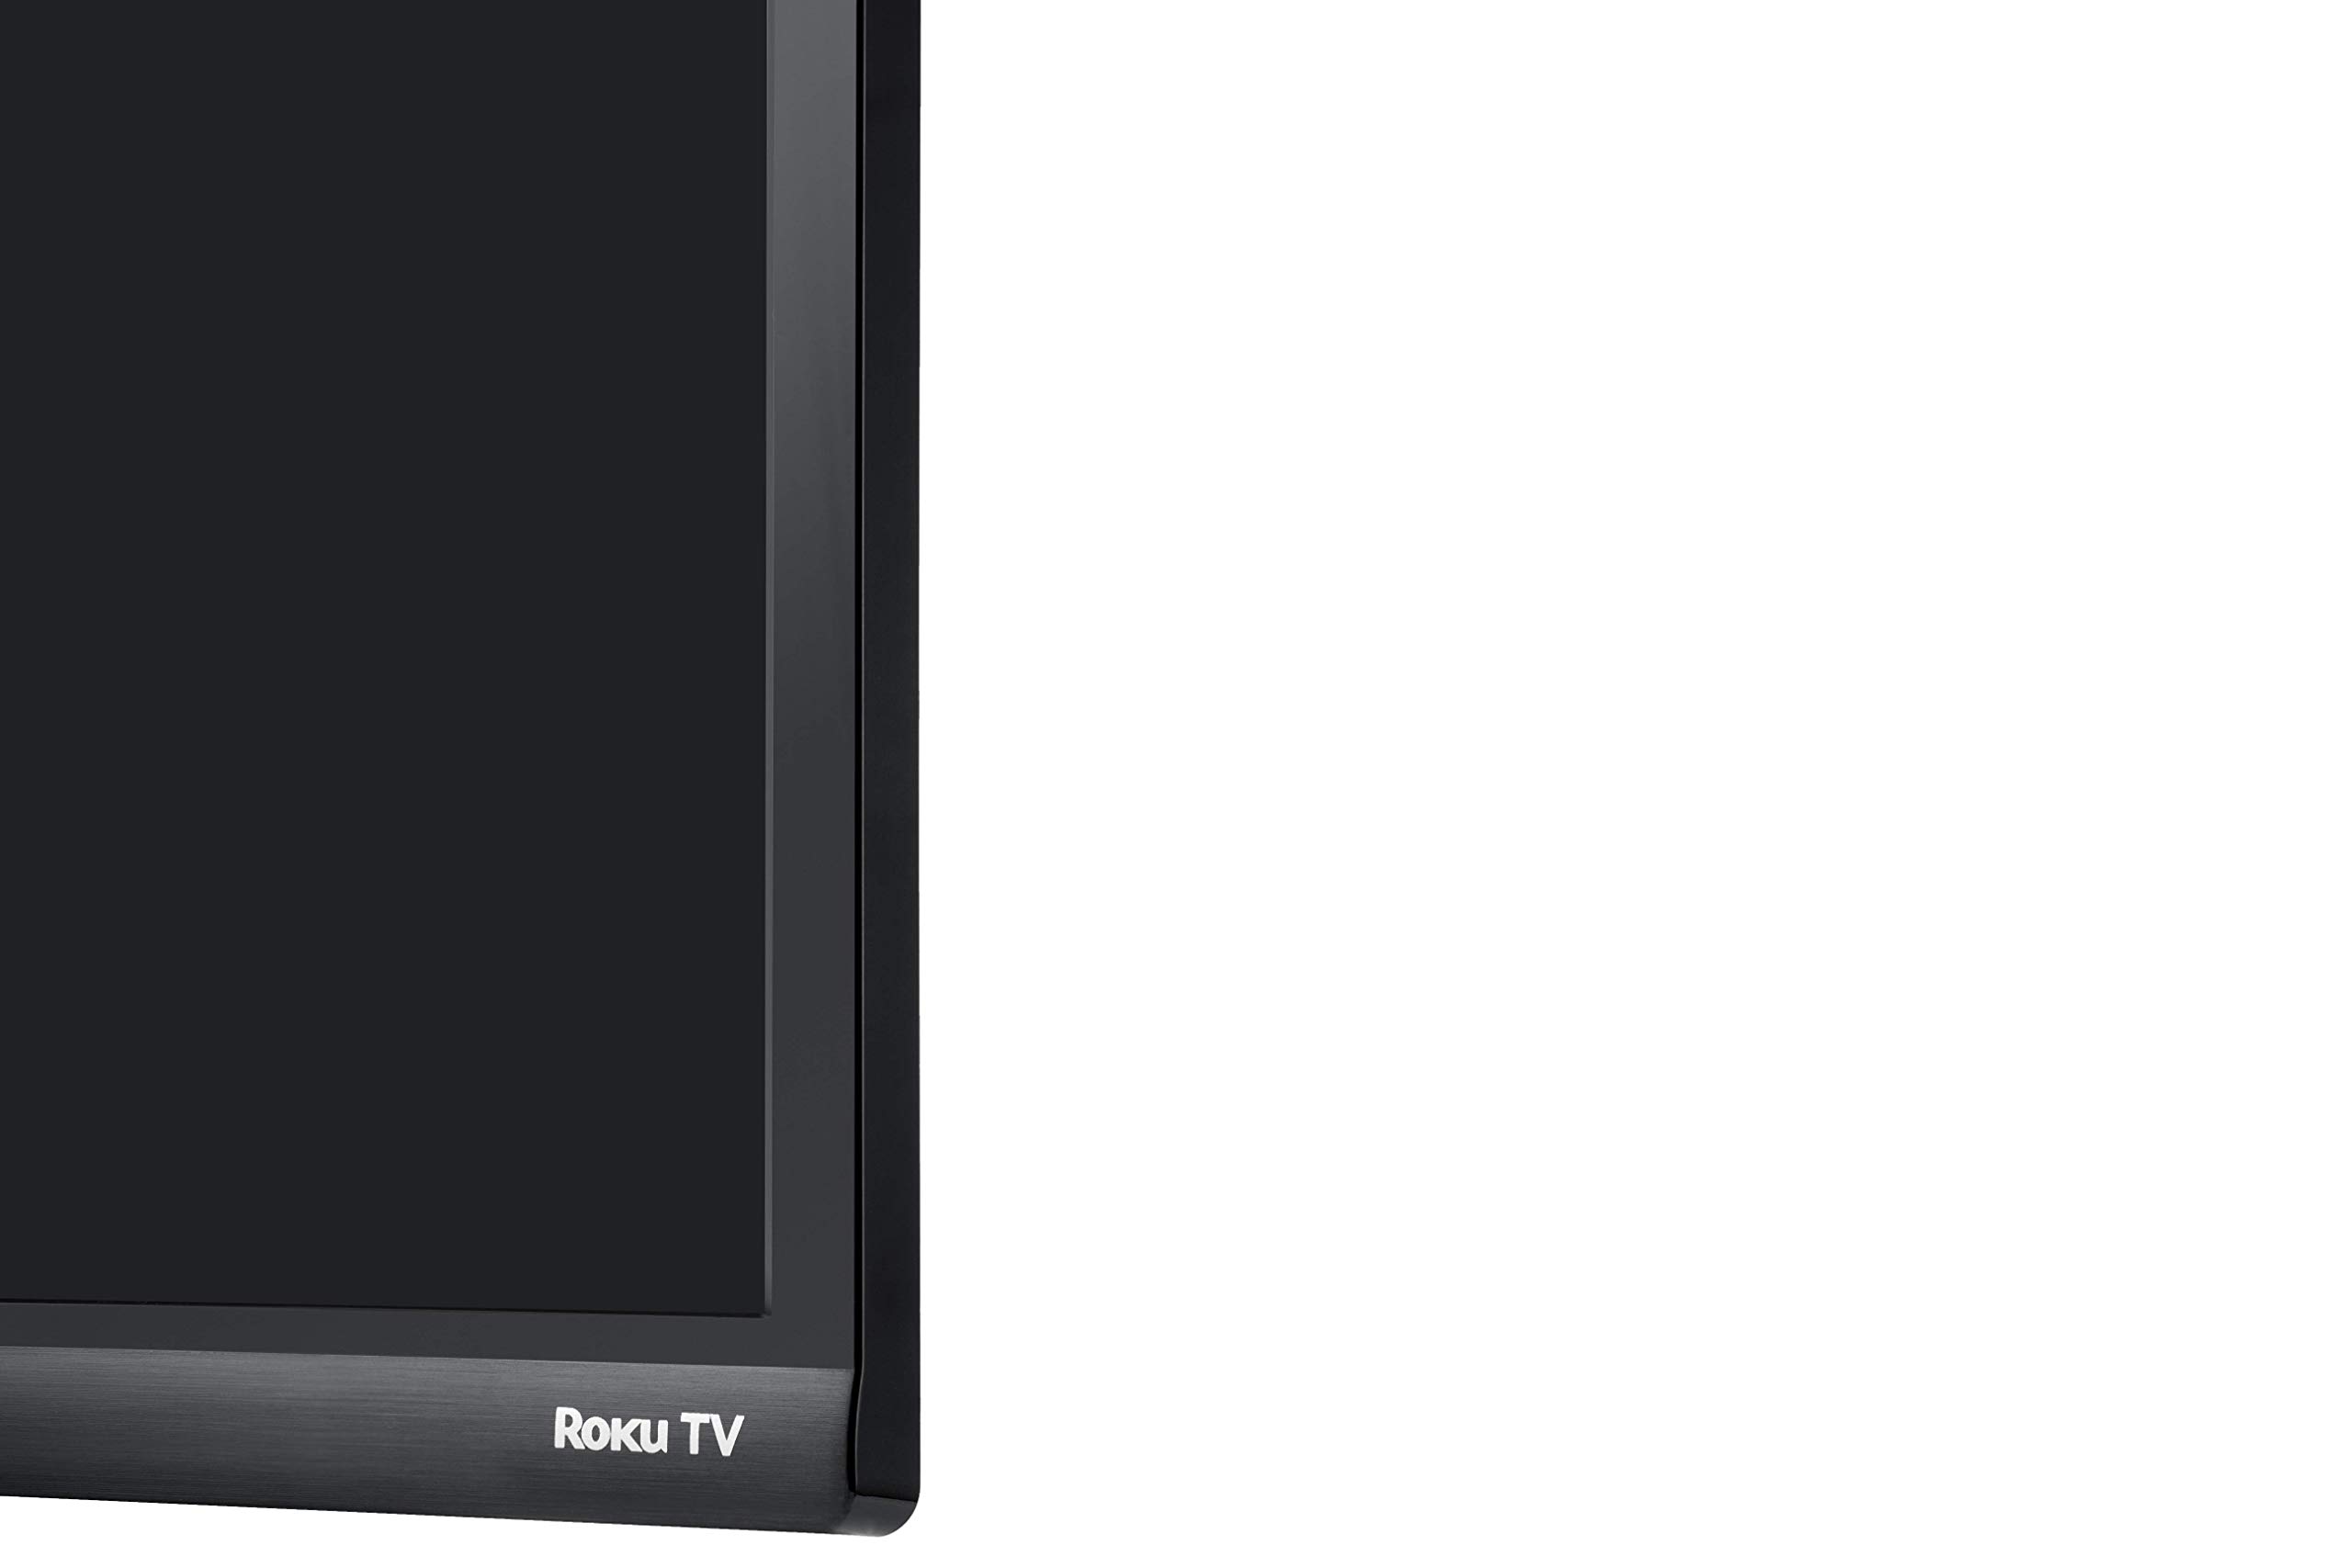 TCL 43-inch 4K UHD Smart LED TV - 43S435, 2021 Model